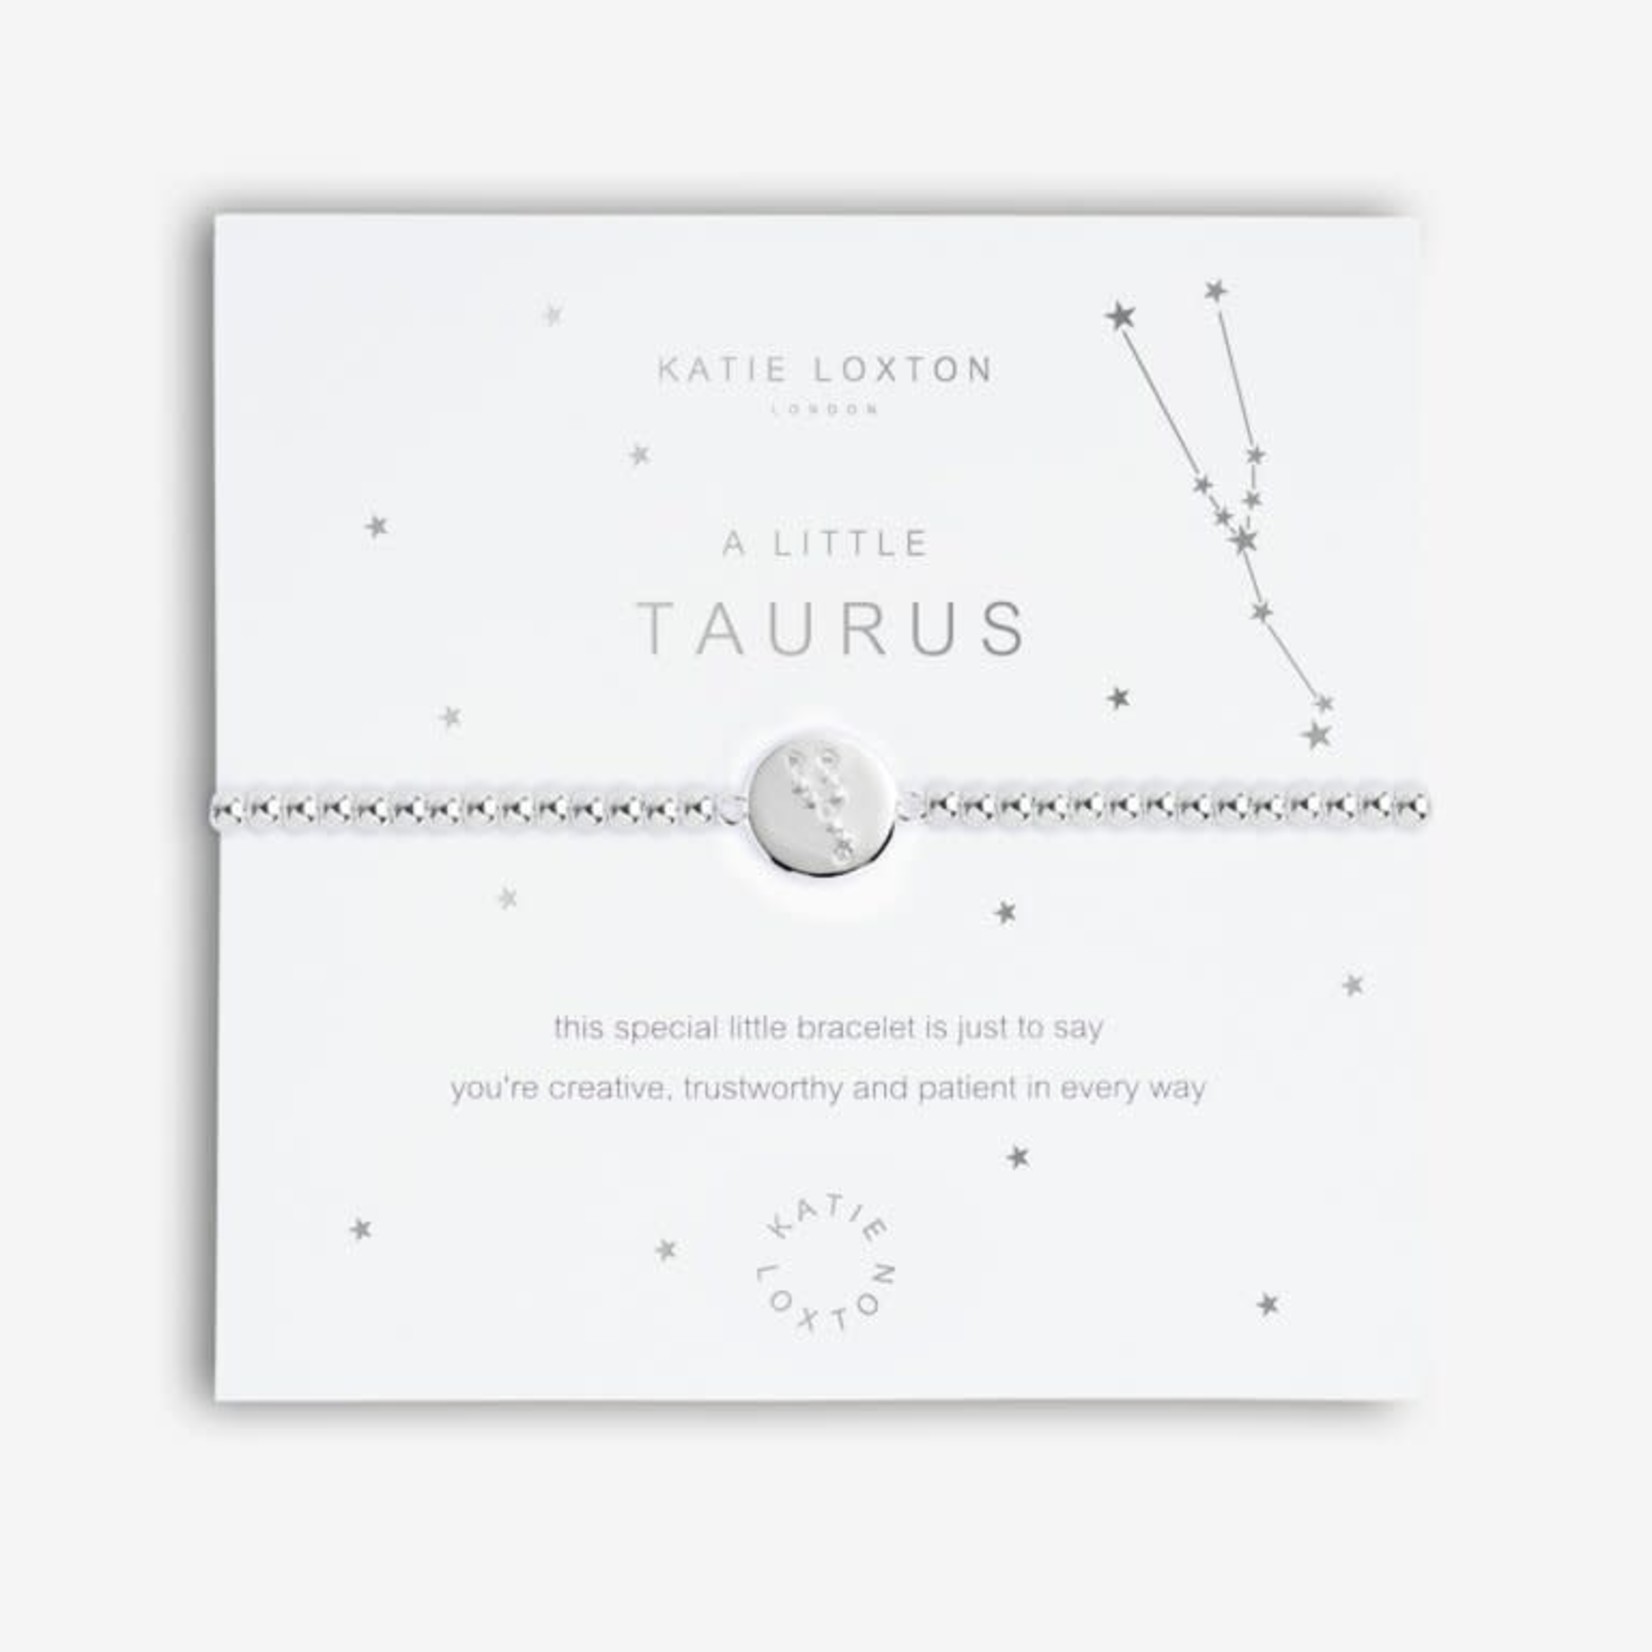 Katie Loxton A Little Taurus Bracelet